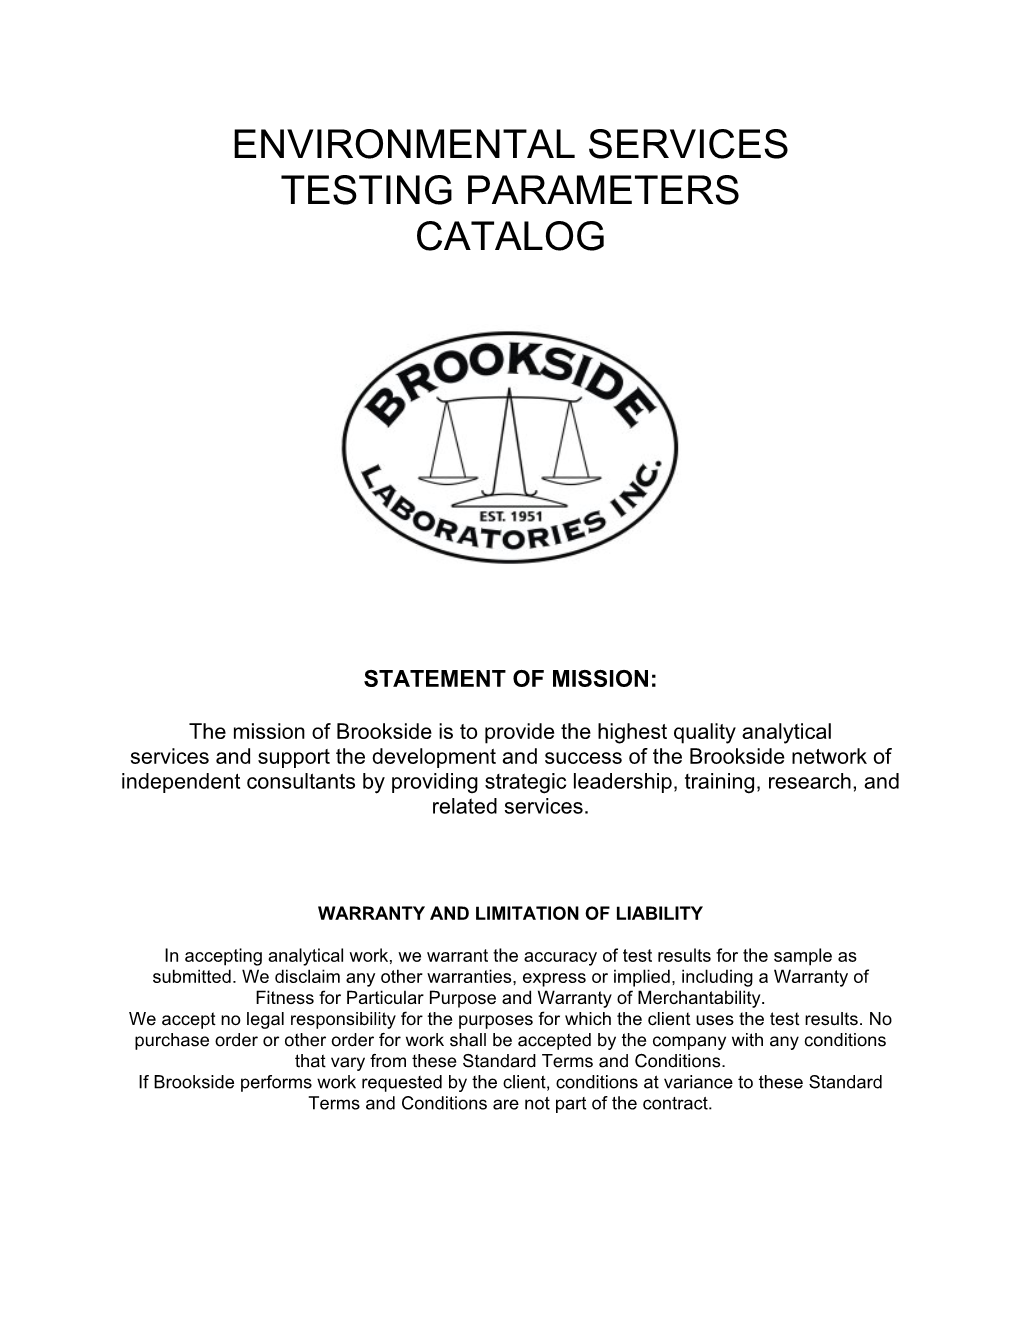 Environmental Services Testing Parameters Catalog